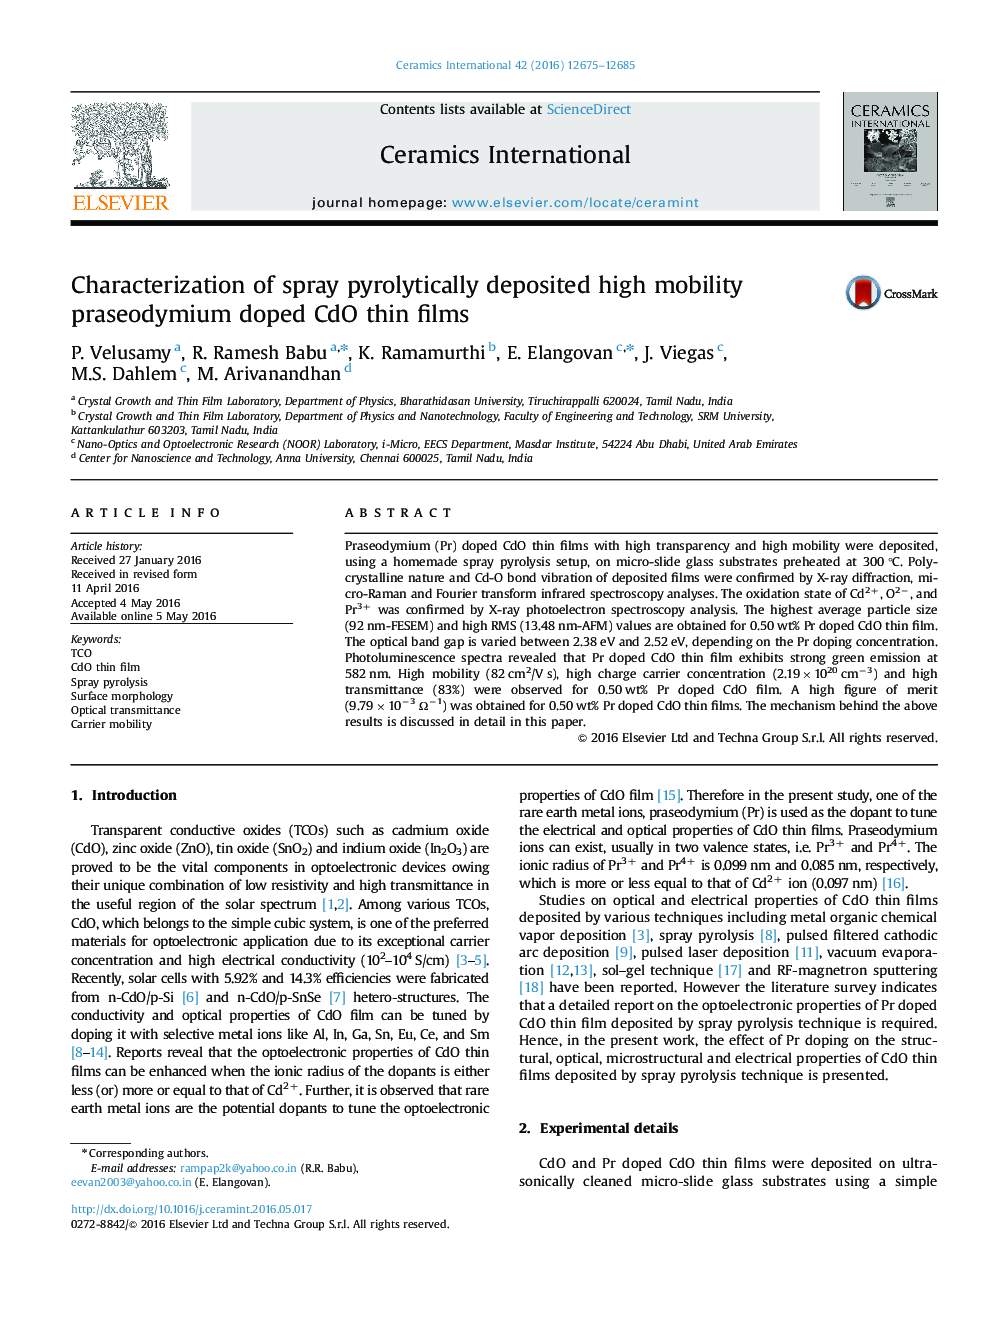 Characterization of spray pyrolytically deposited high mobility praseodymium doped CdO thin films